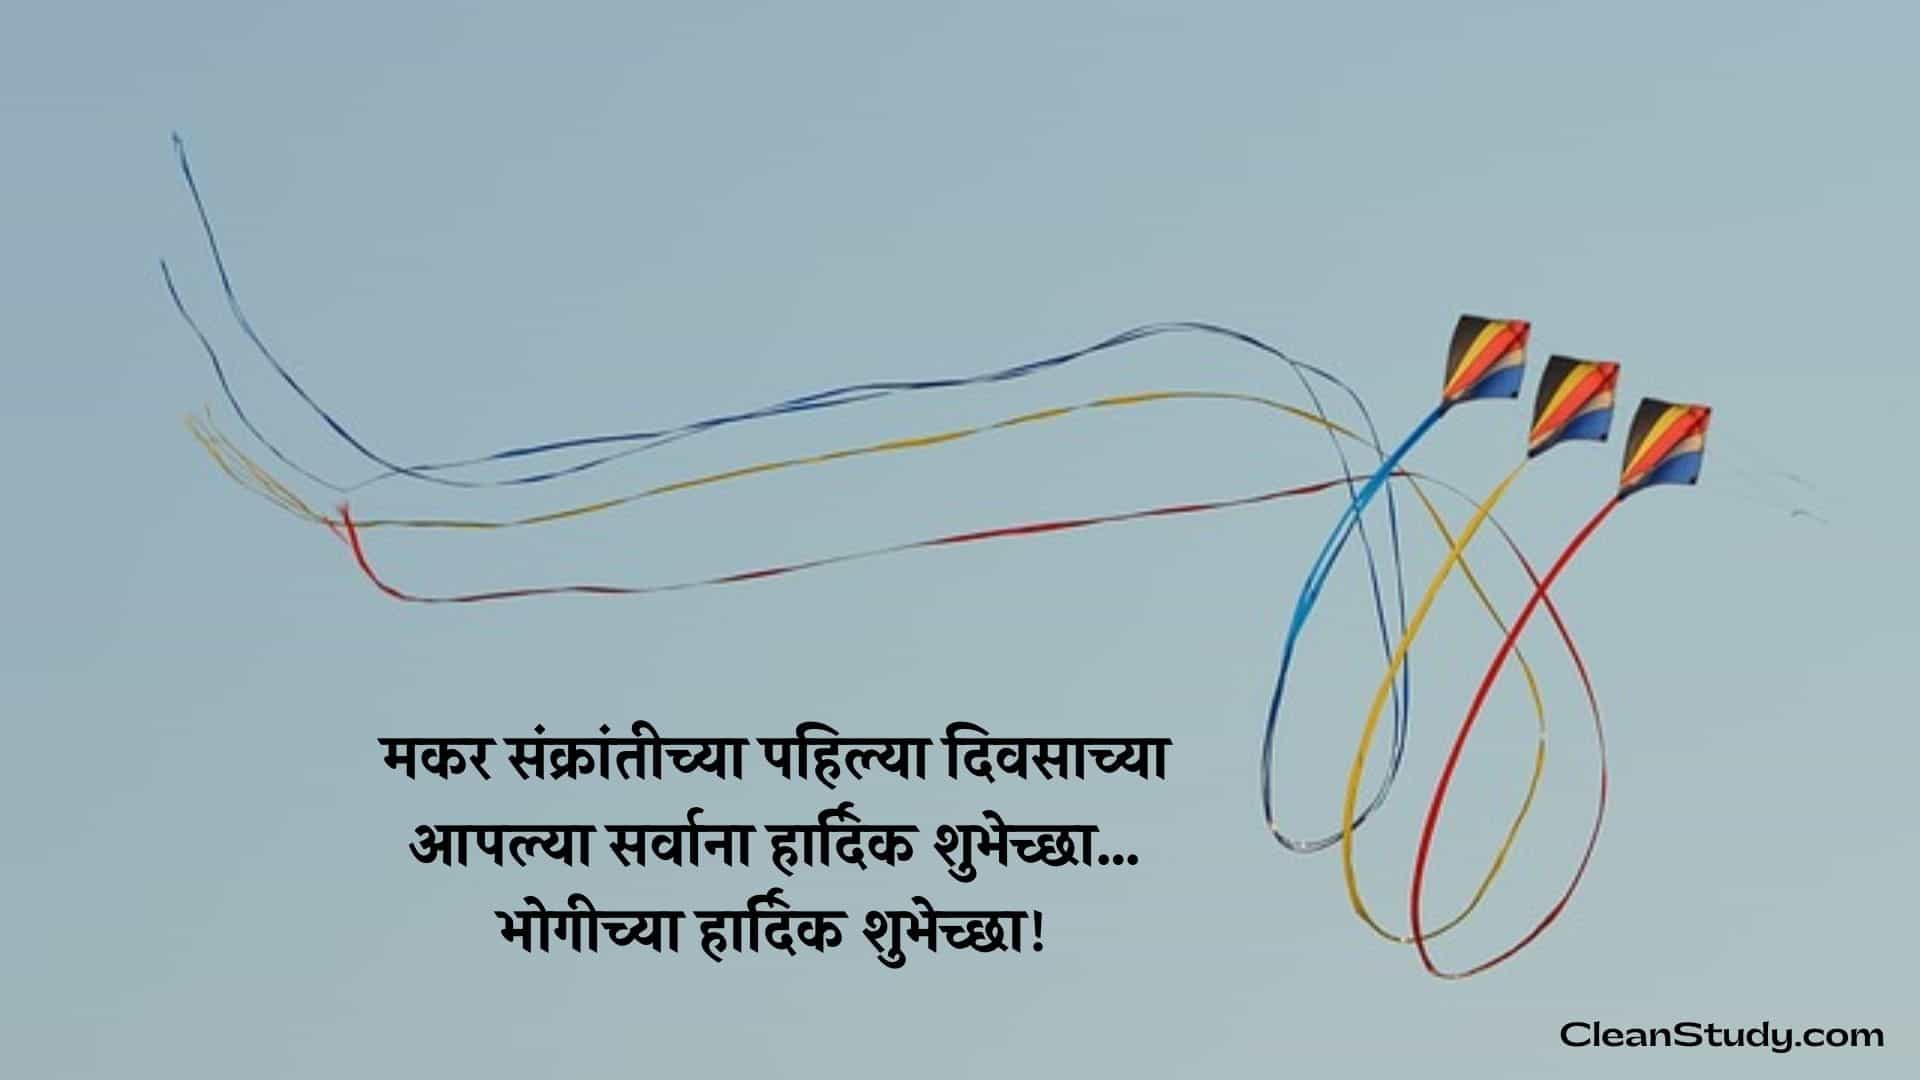 Makar Sankranti Wishes in Marathi 2021